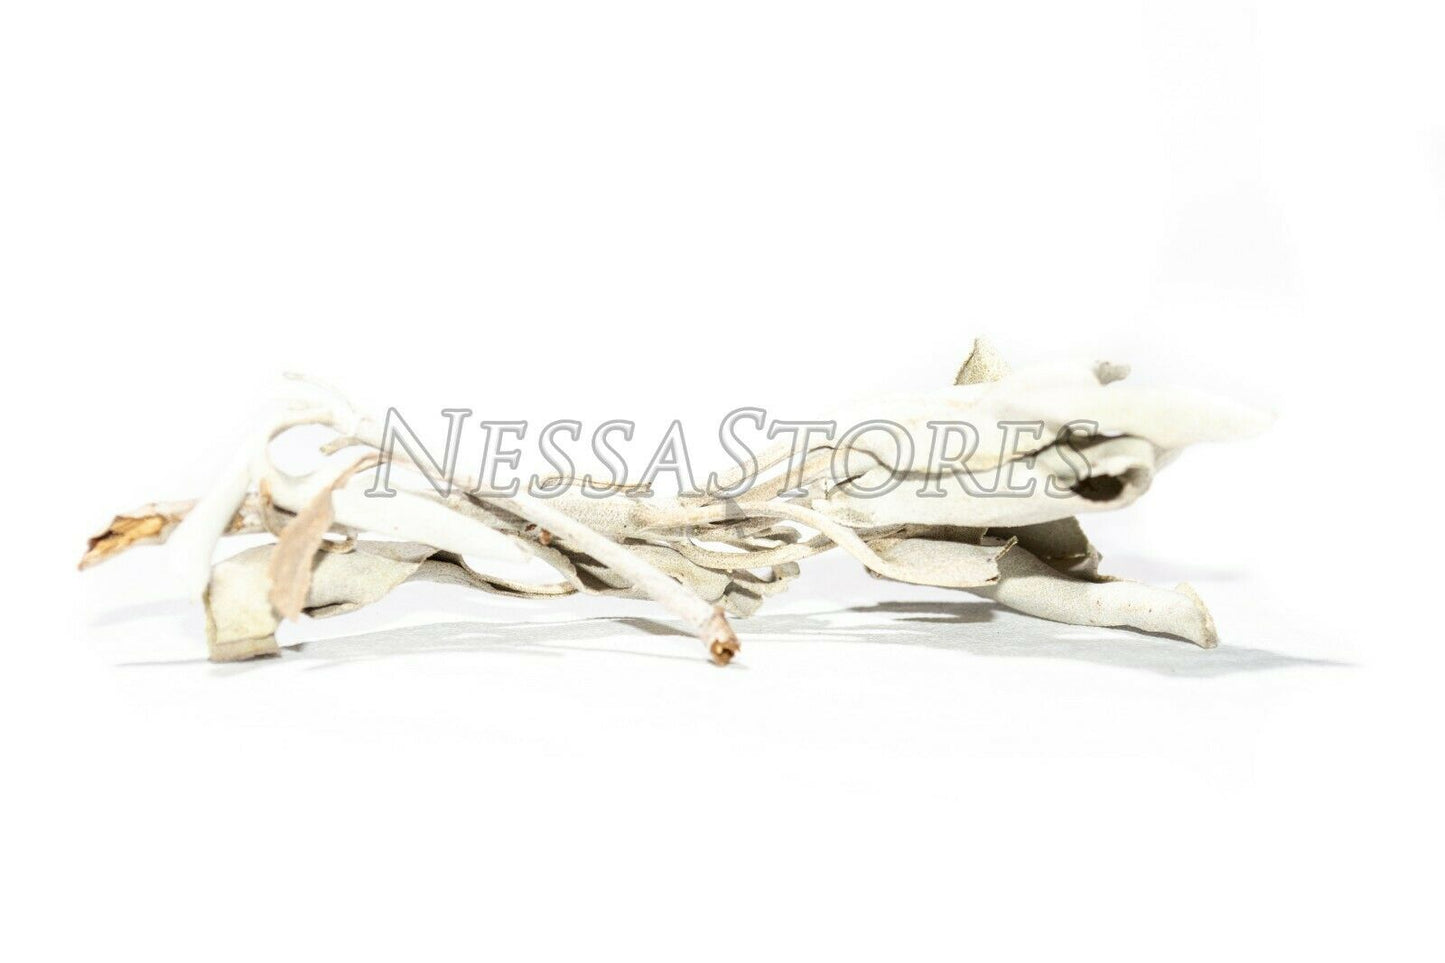 NessaStores California White Sage Smudge Loose Cluster Incense Bulk (1/2 lb) #JC-001